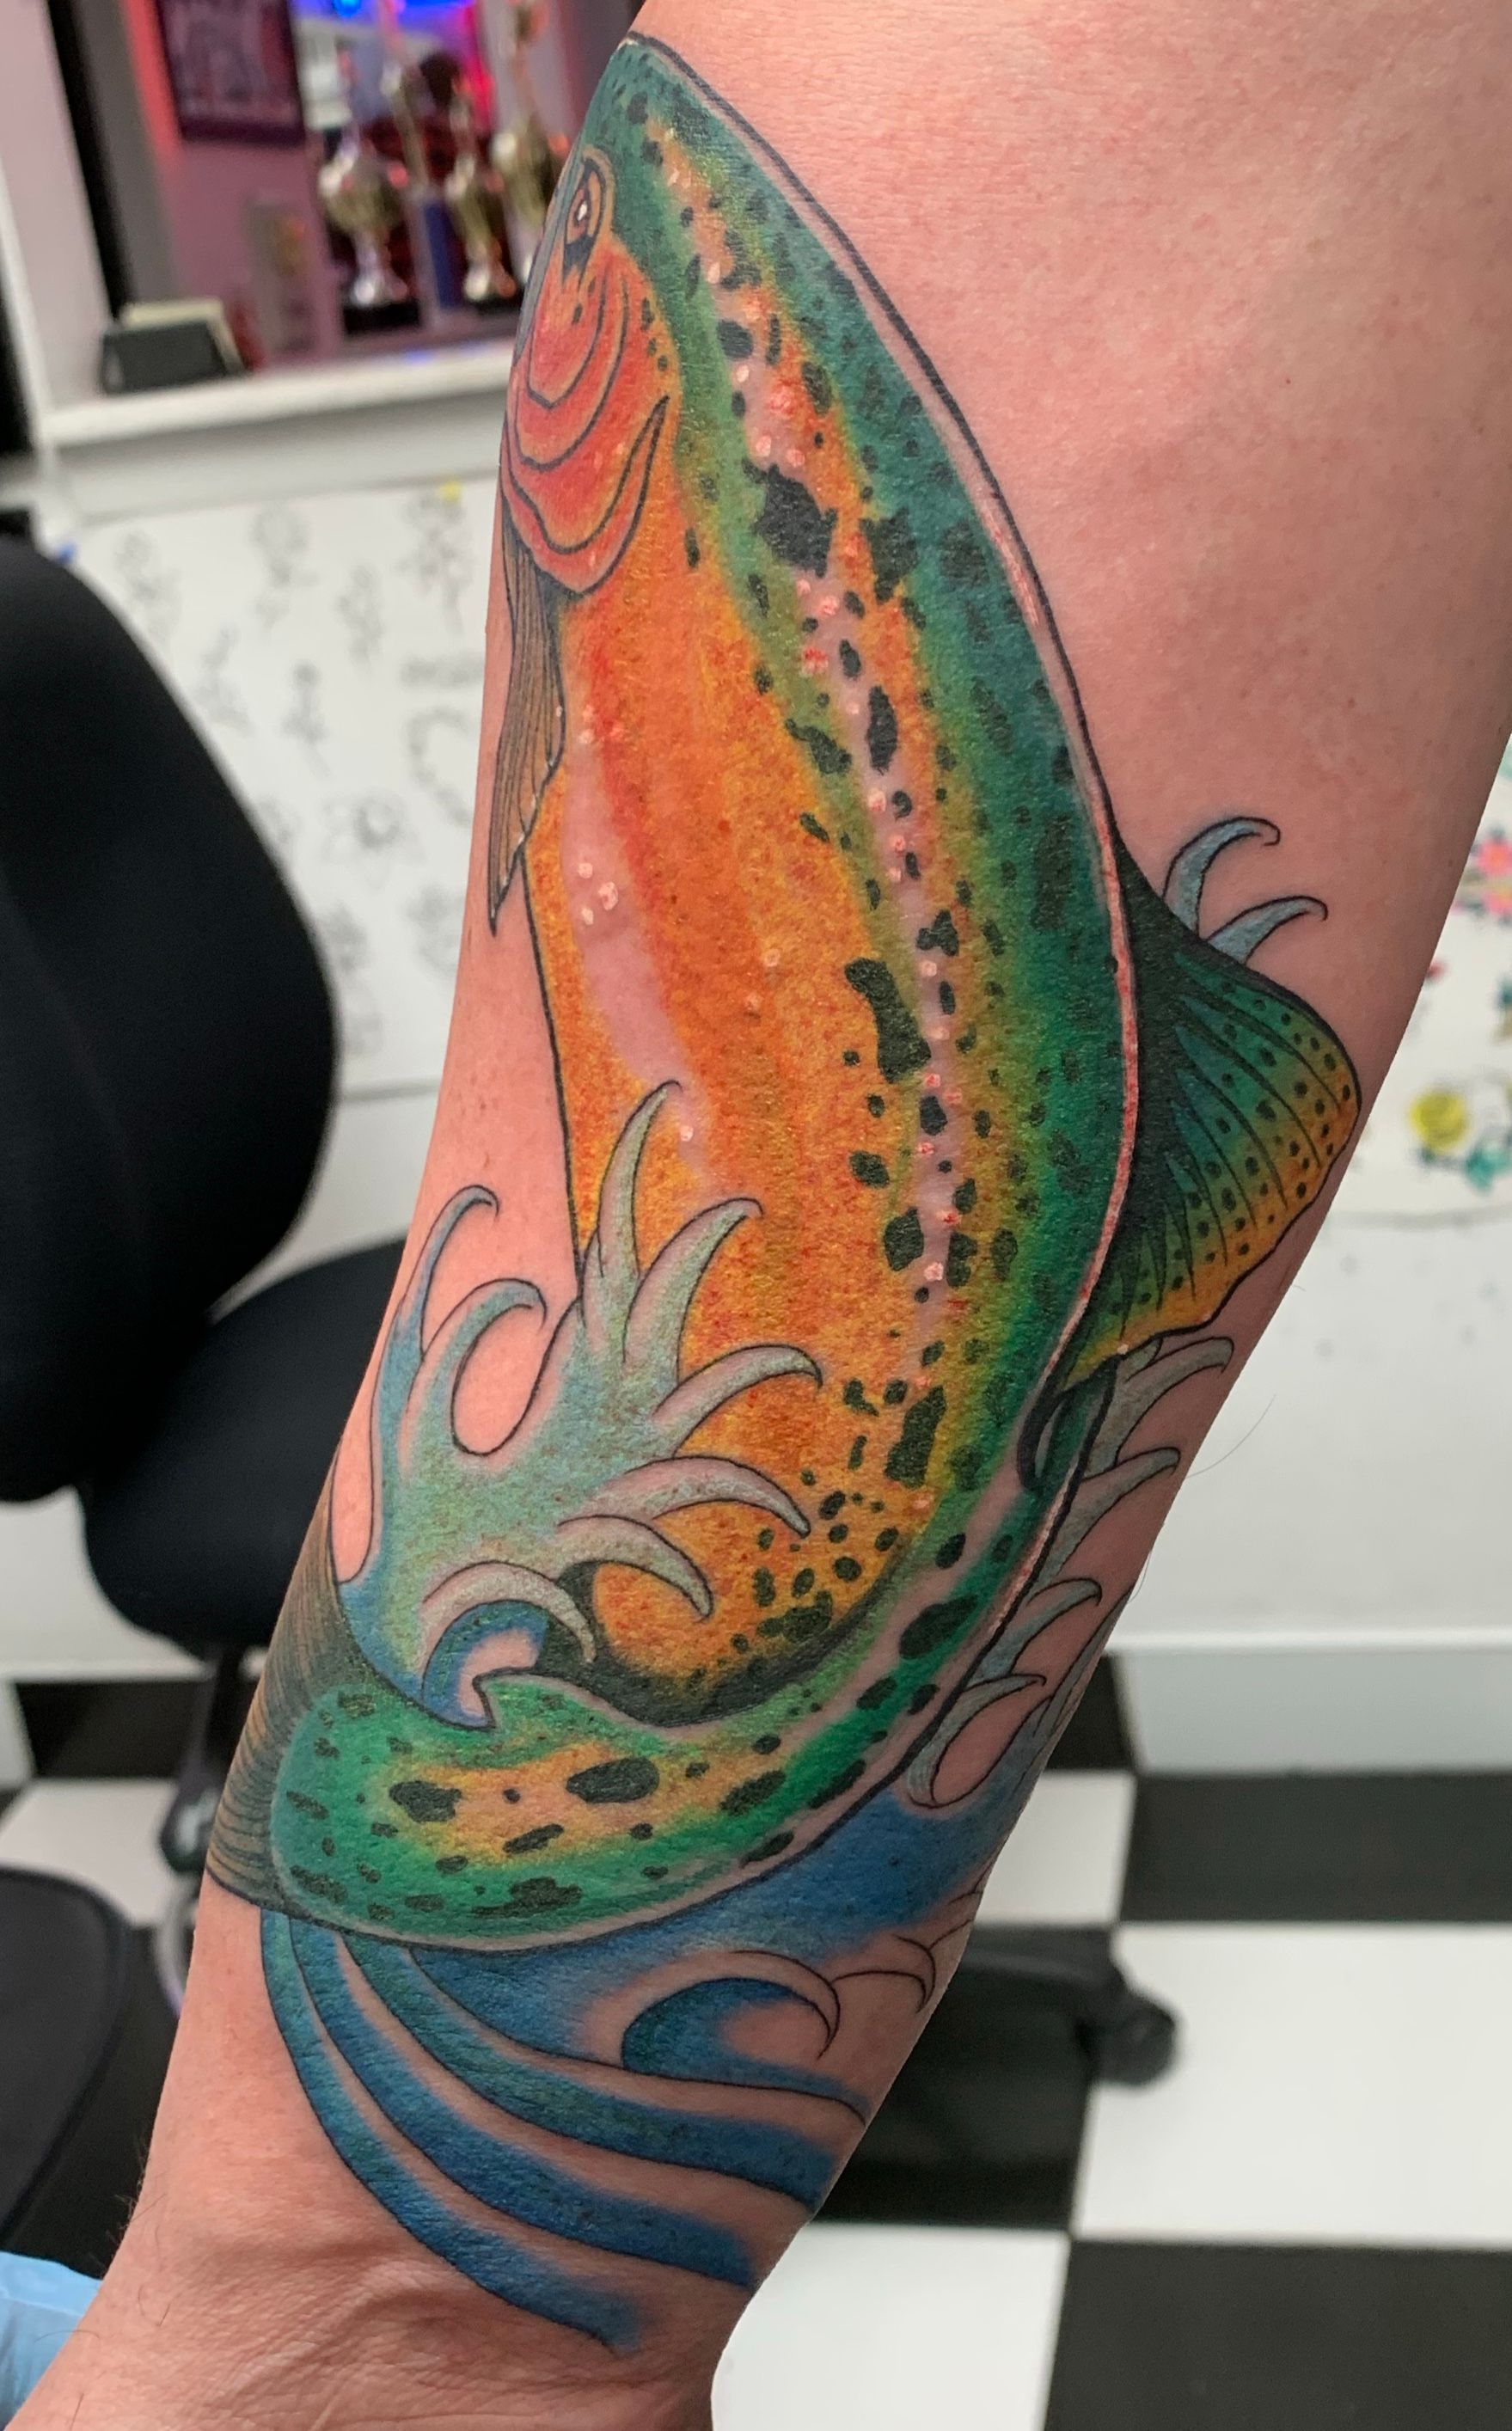 More Fish Tattoos  FISHING FURY  A Fishing Blog with Attitude